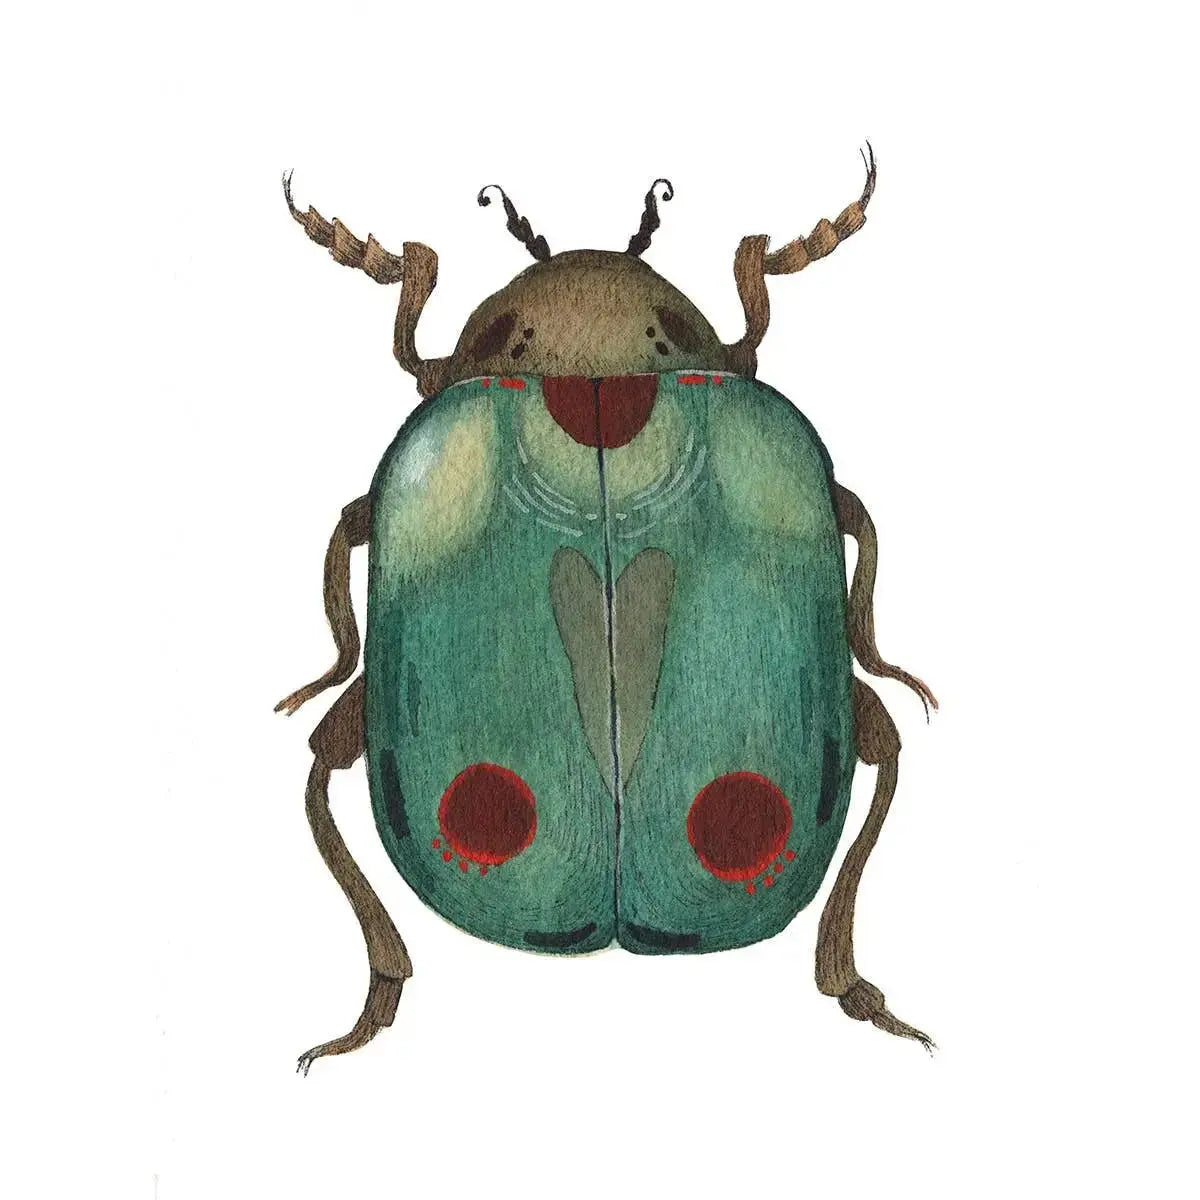 5"x7" Print - Bug Collection - Beetle